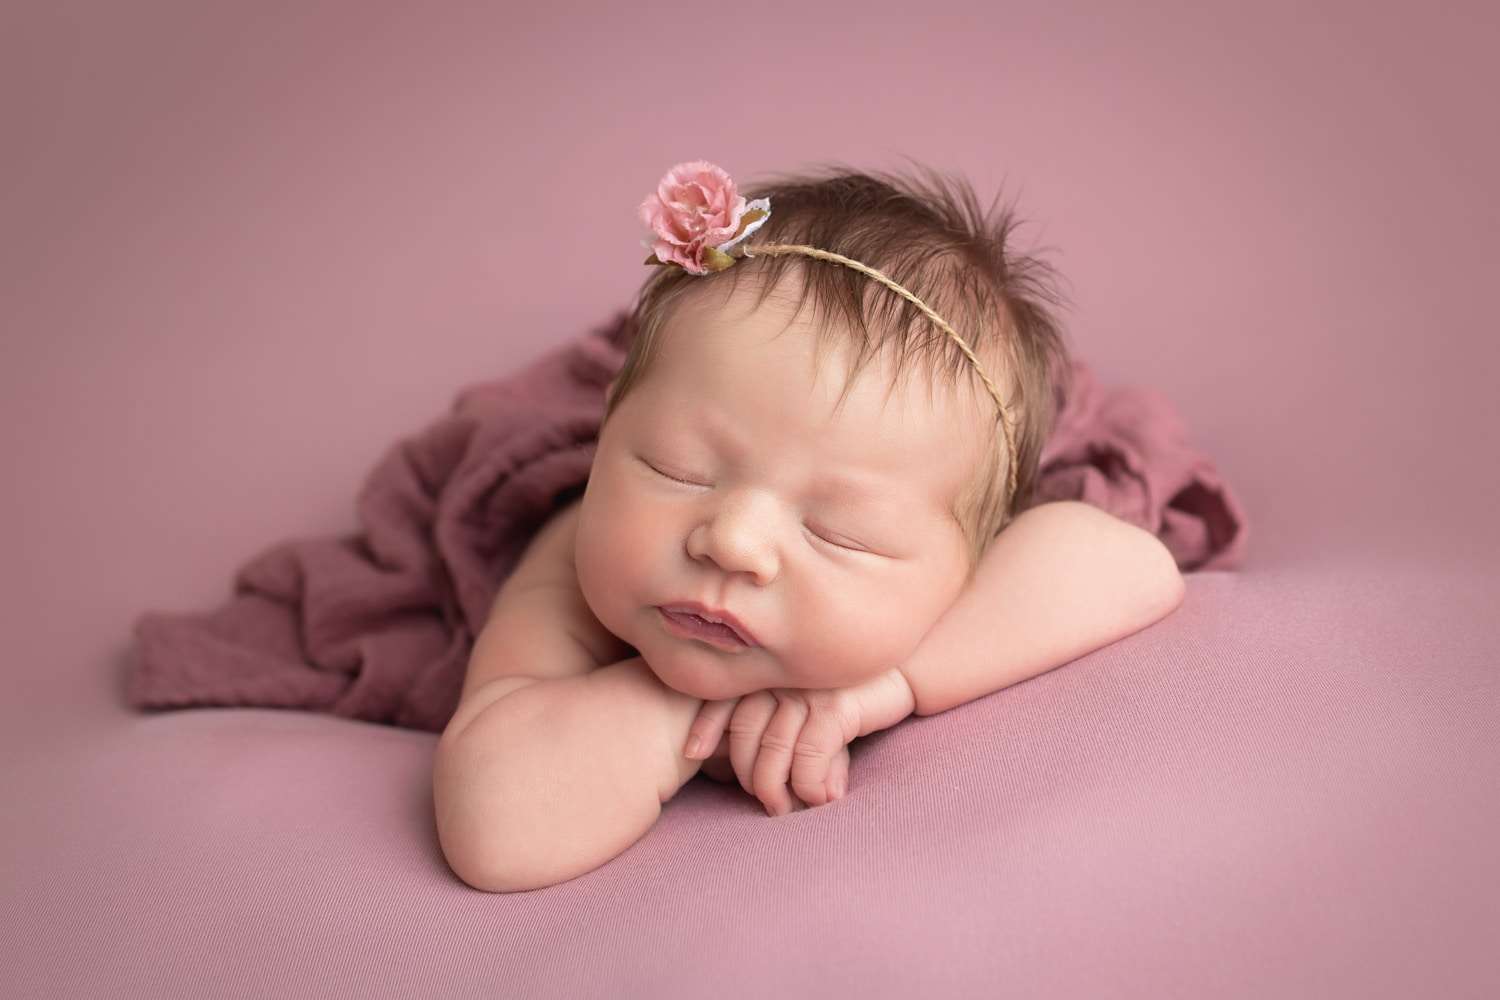 newborn photographer in rochester ny captures newborn baby girl sleeping chin on hands